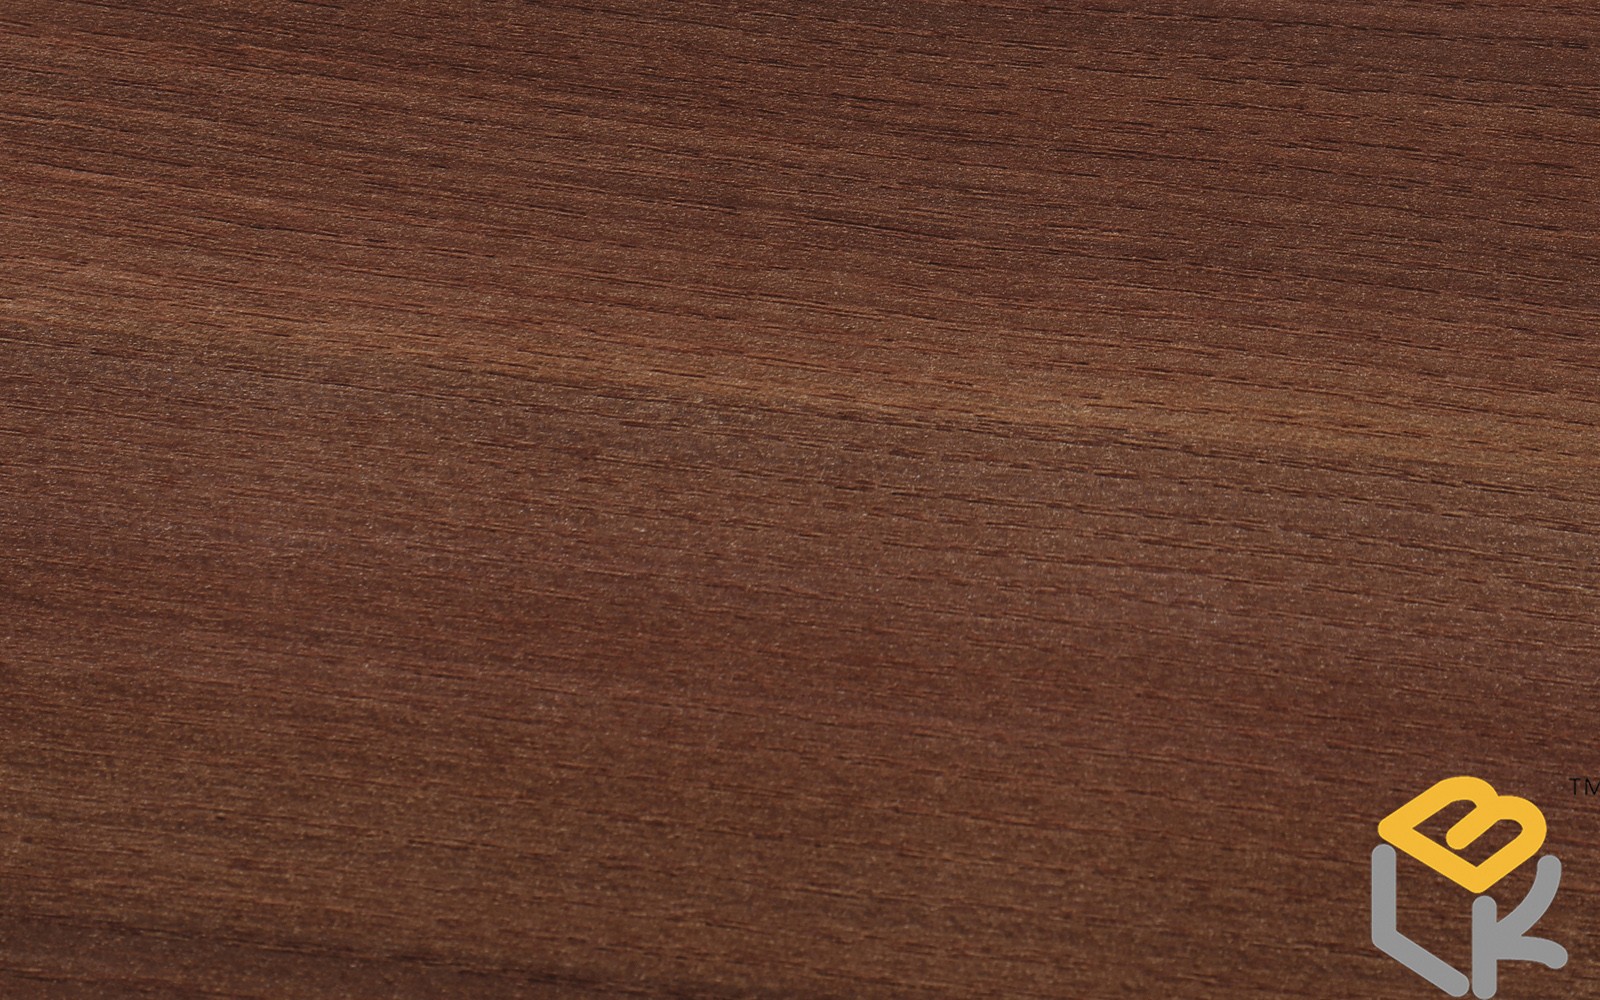 BLK woodgrain melamine faced plywood